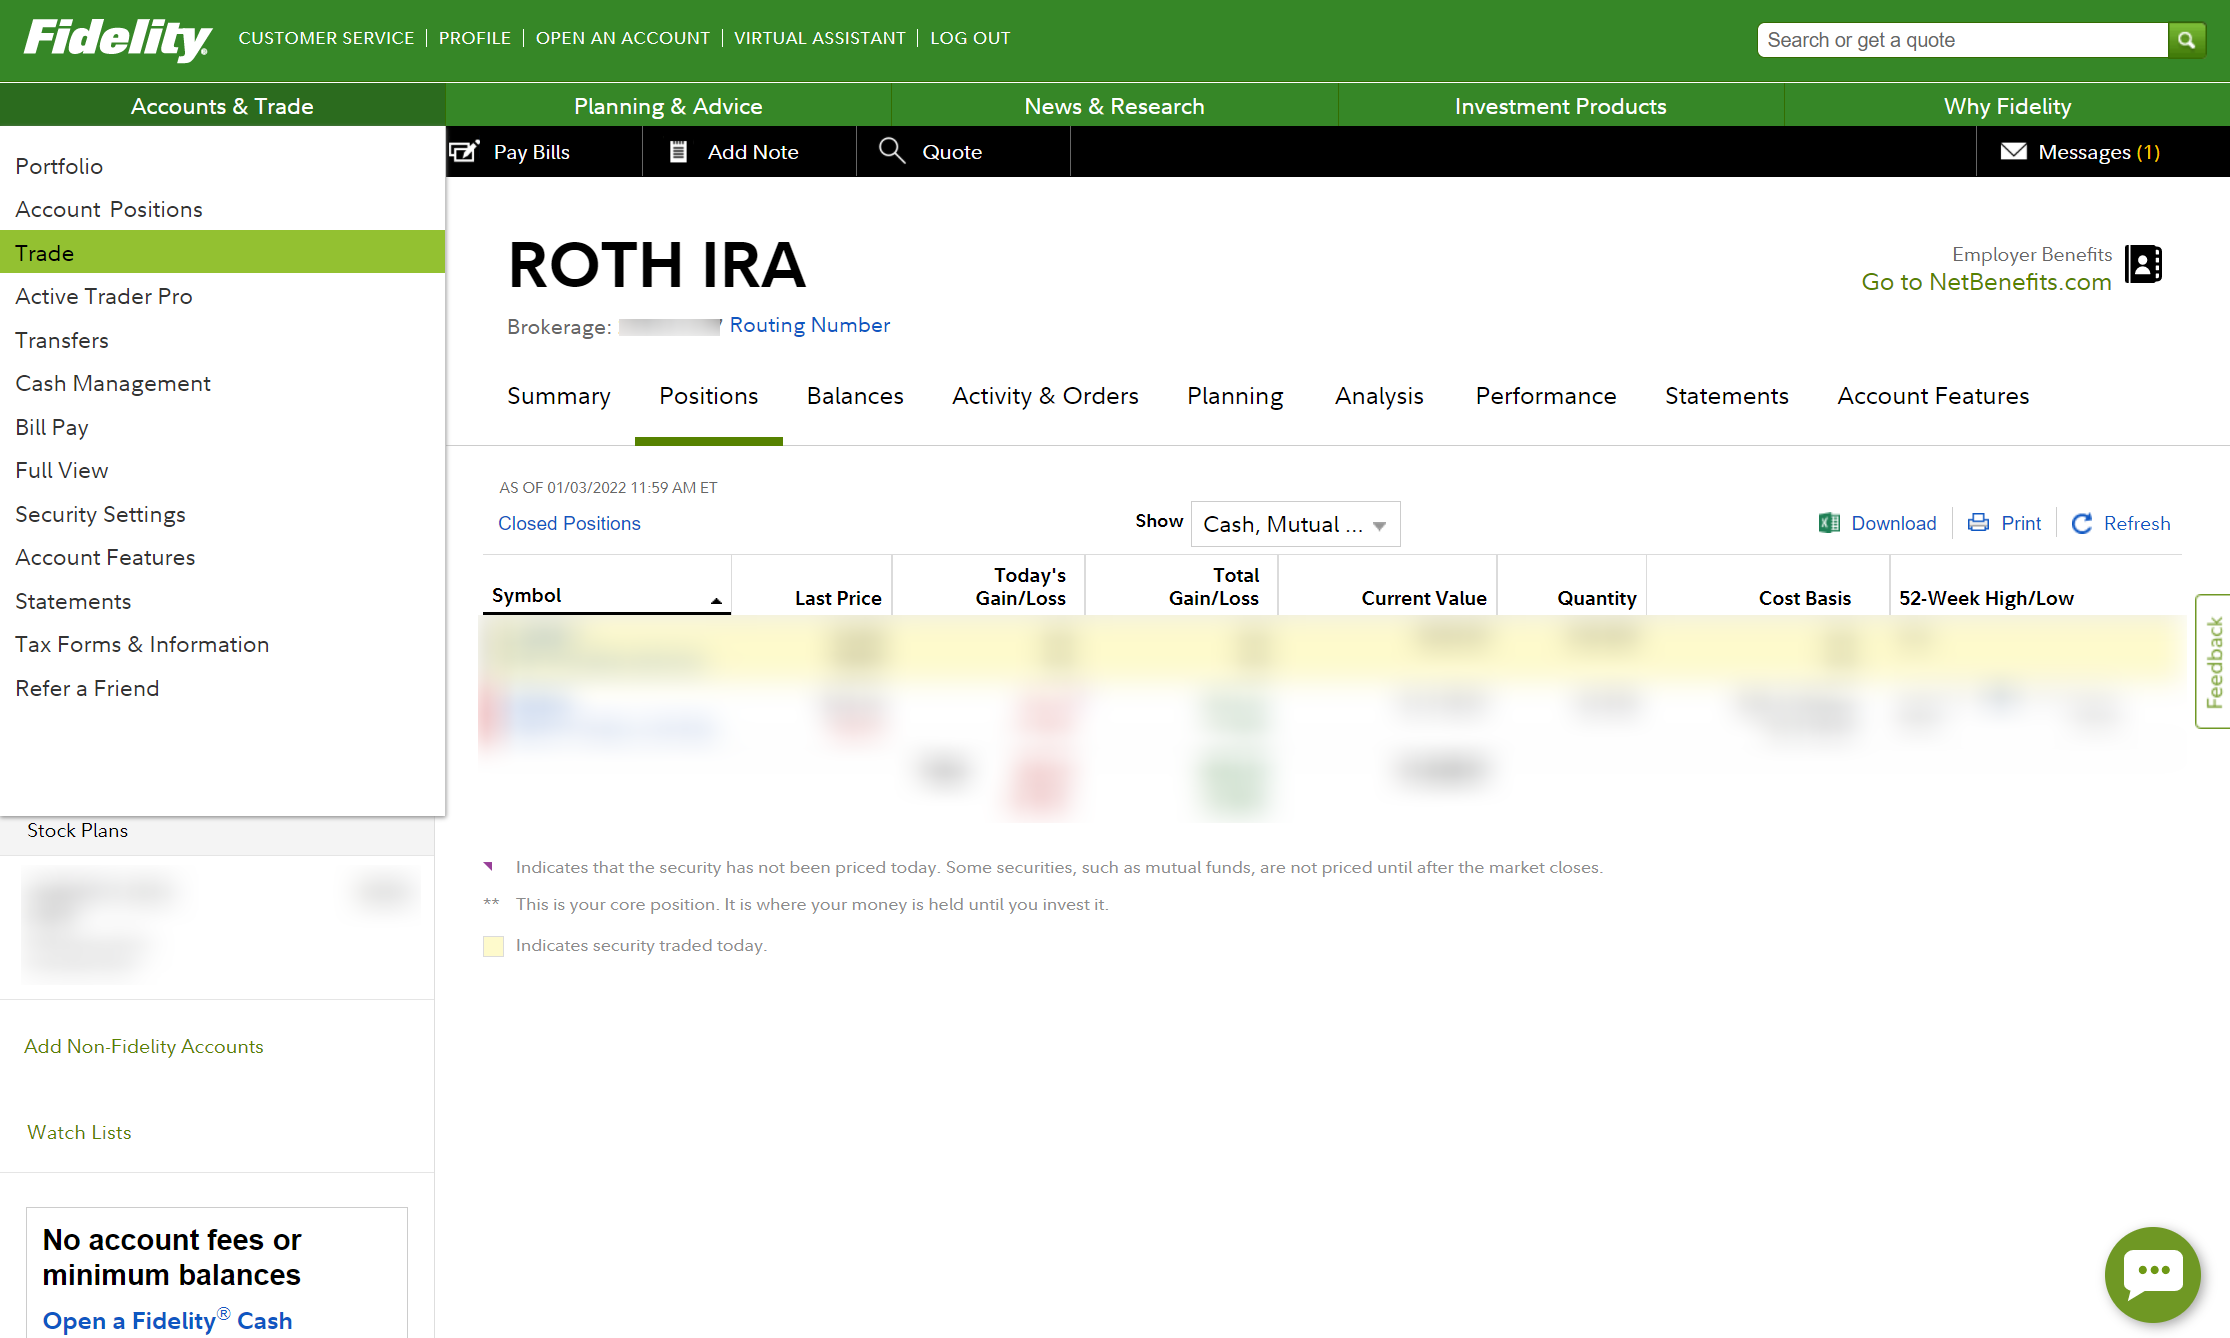 Fidelity Roth IRA: Trade